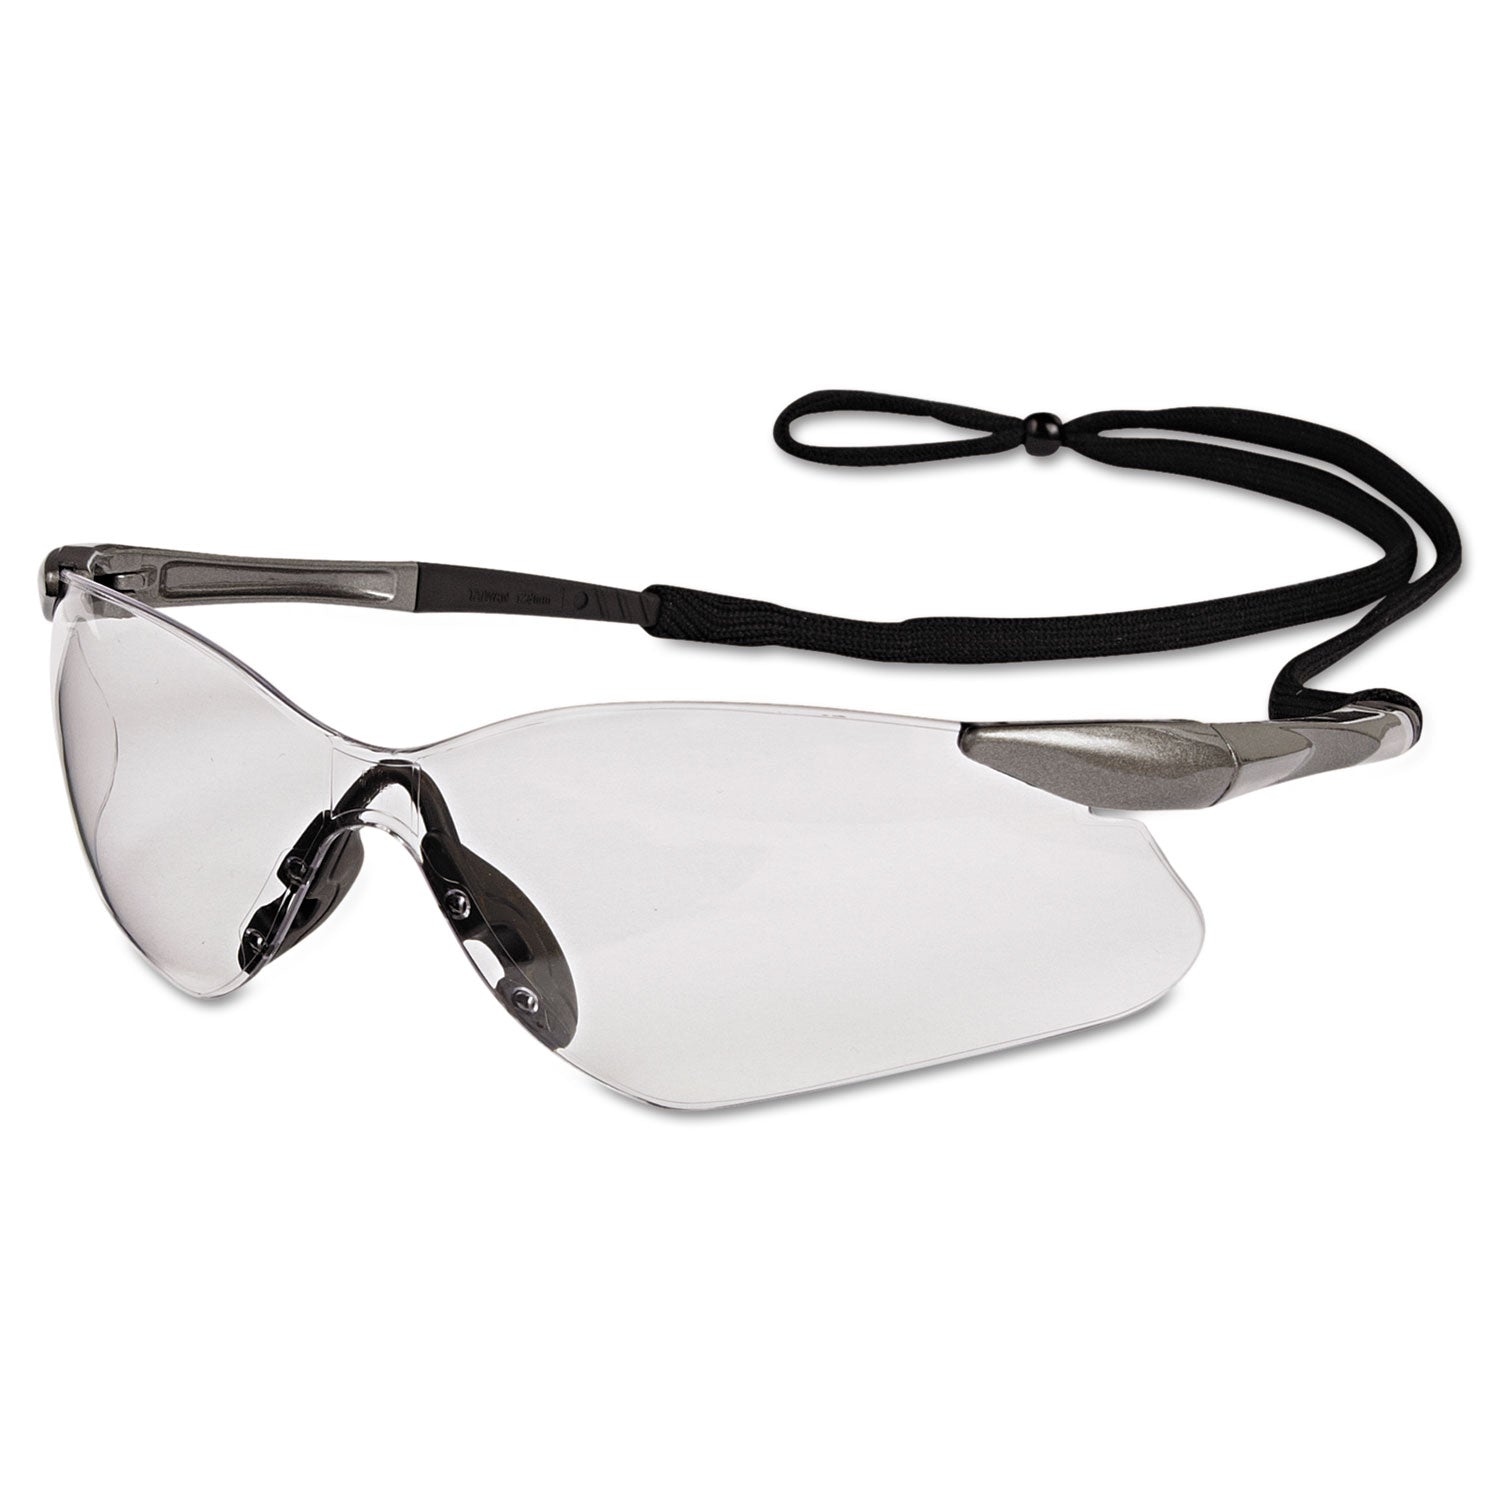 v30-nemesis-vl-safety-glasses-gunmetal-frame-clear-lens_kcc20470 - 1